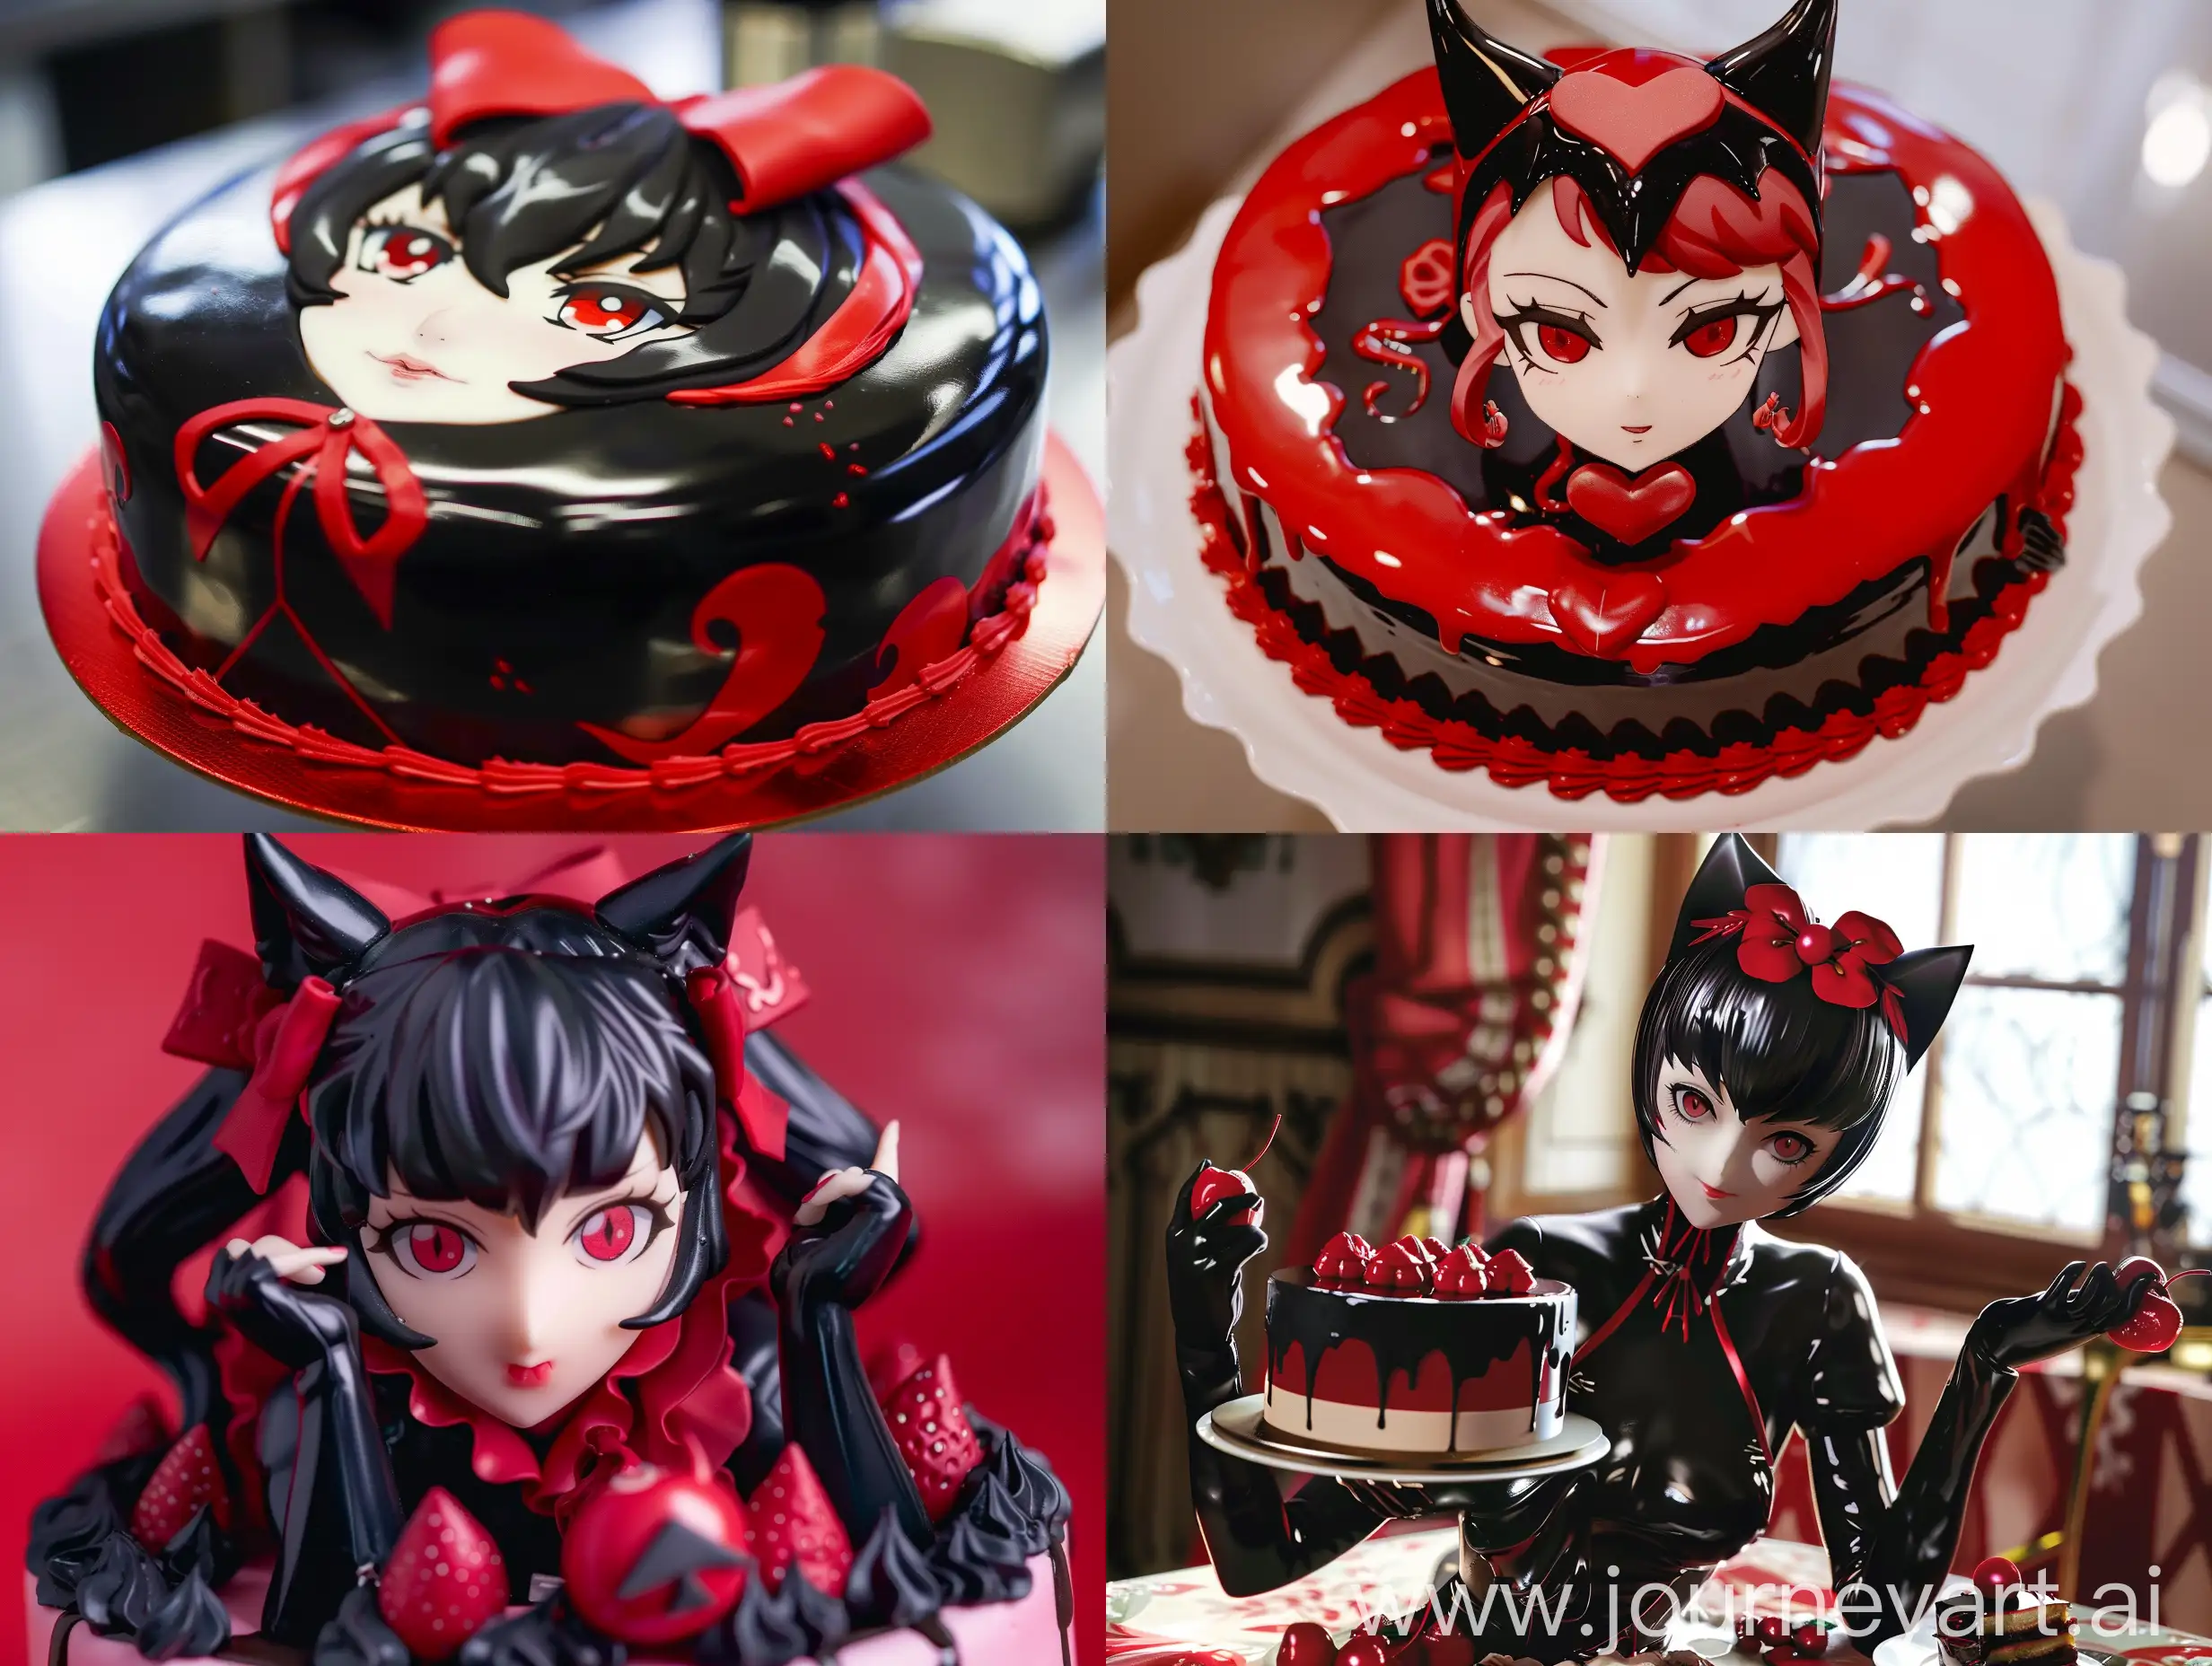 Morgana-Persona-5-Cake-Devouring-Portrait